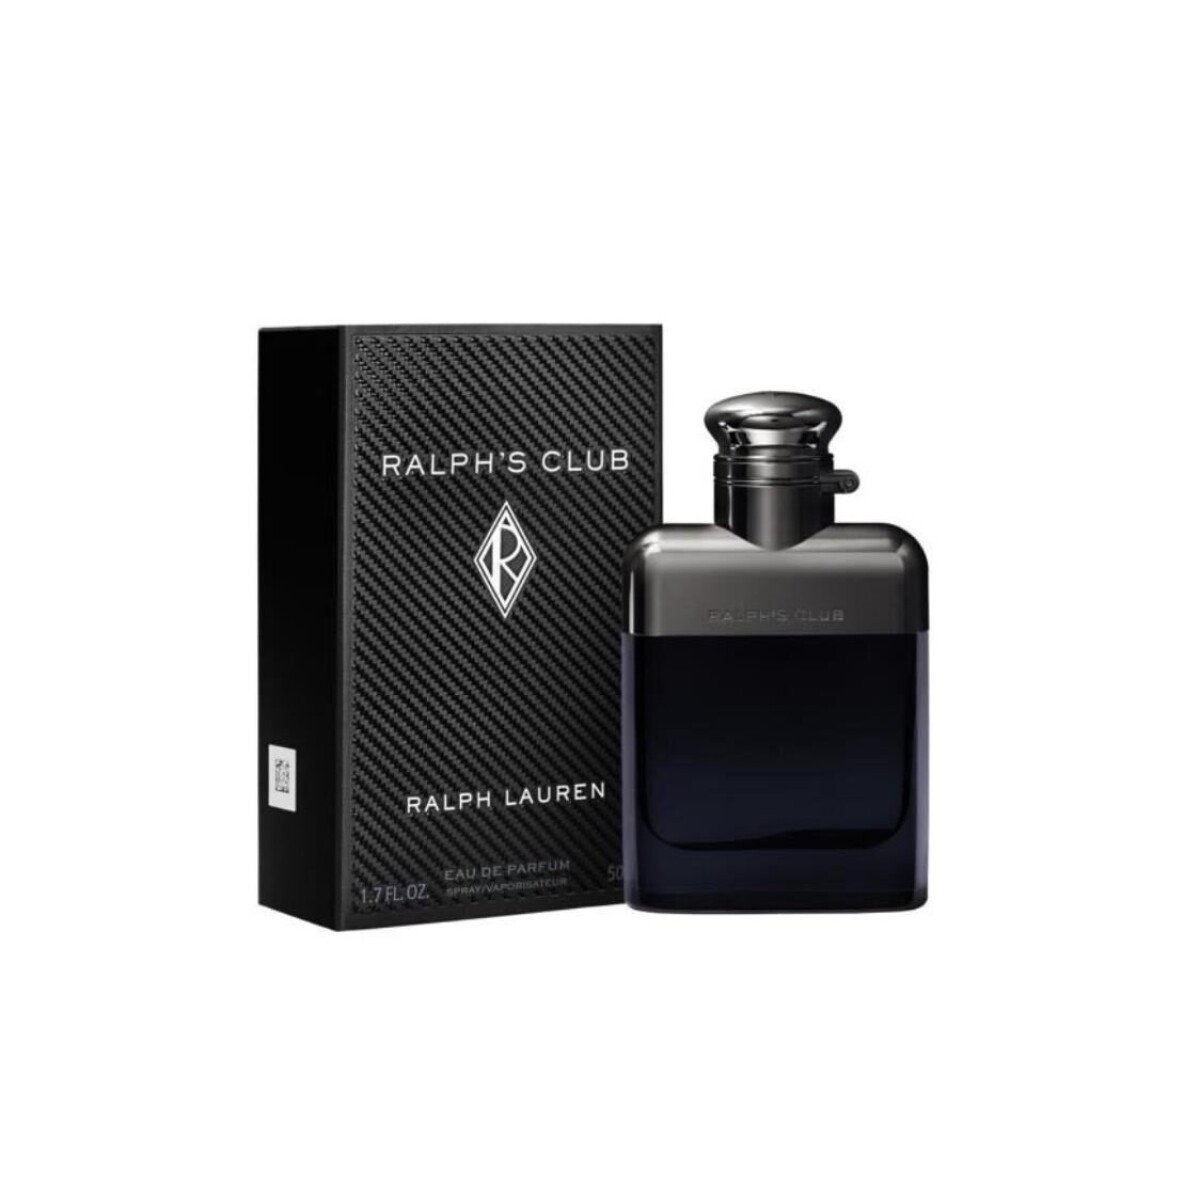 Perfume Ralph's Club Edp 50 Ml. 